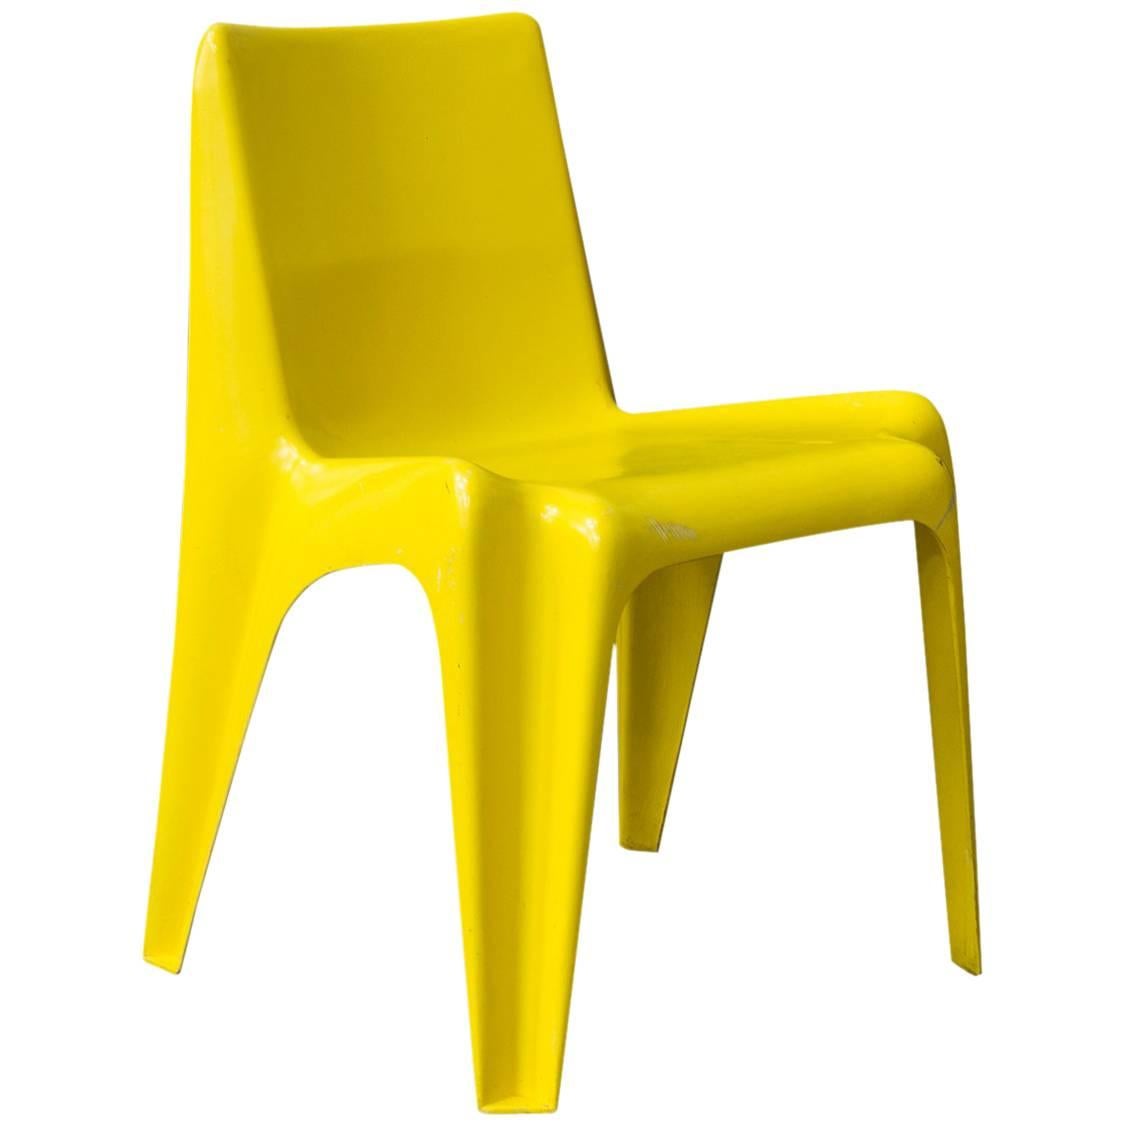 Chaise organique en plastique jaune, rare, vers 1970